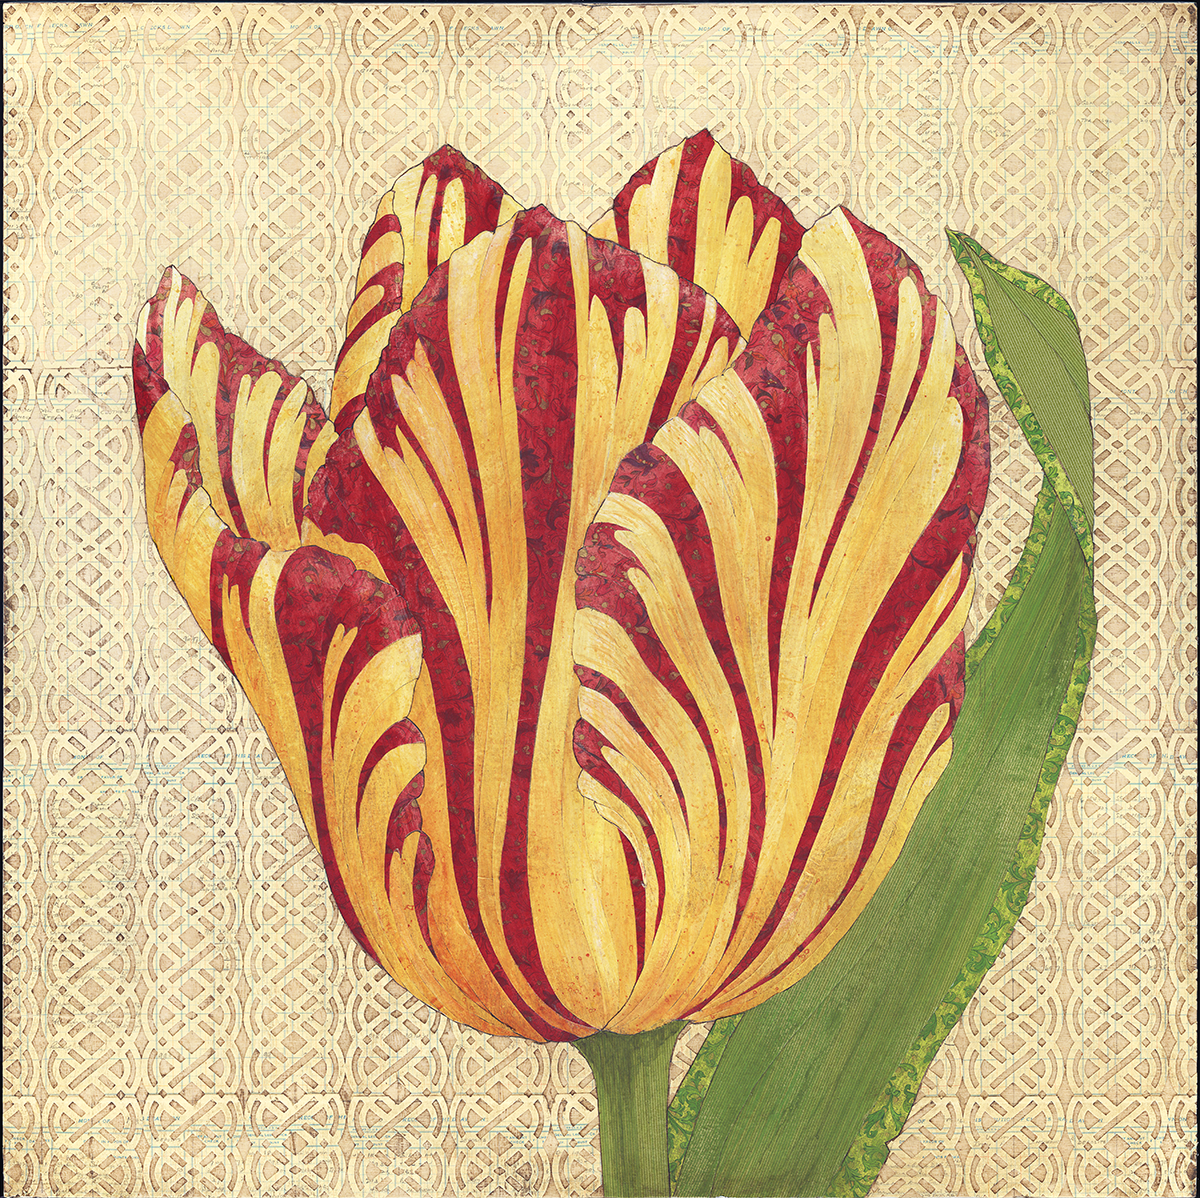 Fire tulip 30x30 asf for orignial thumbnail rsw2xf